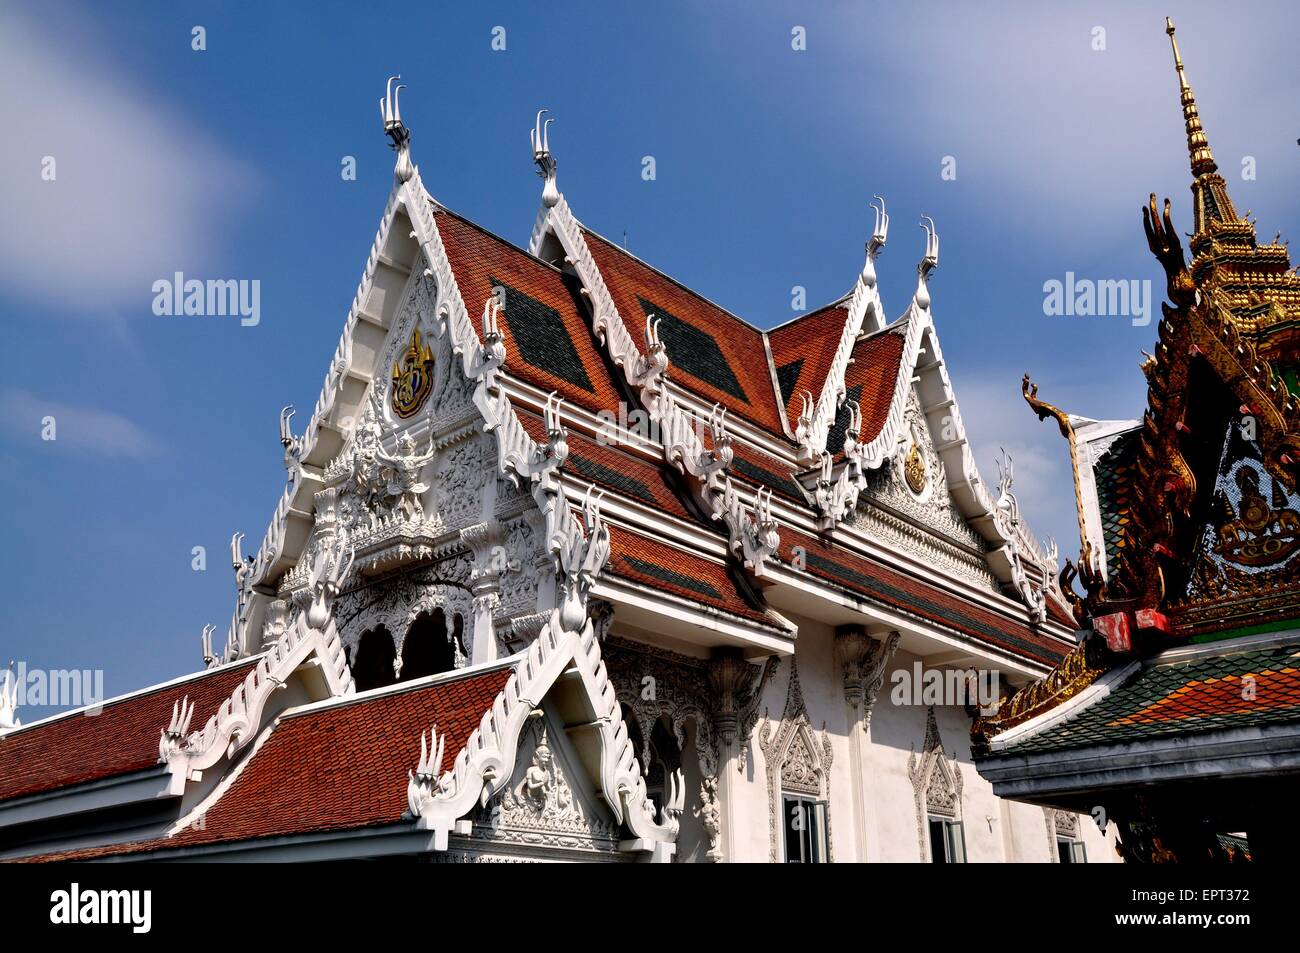 Bangkok, Thailandia: Viharn hall a Wat Hua Lamphong con la sua ripidamente inclinate di tetti a capanna e bianco chofah bird-come chofahs Foto Stock